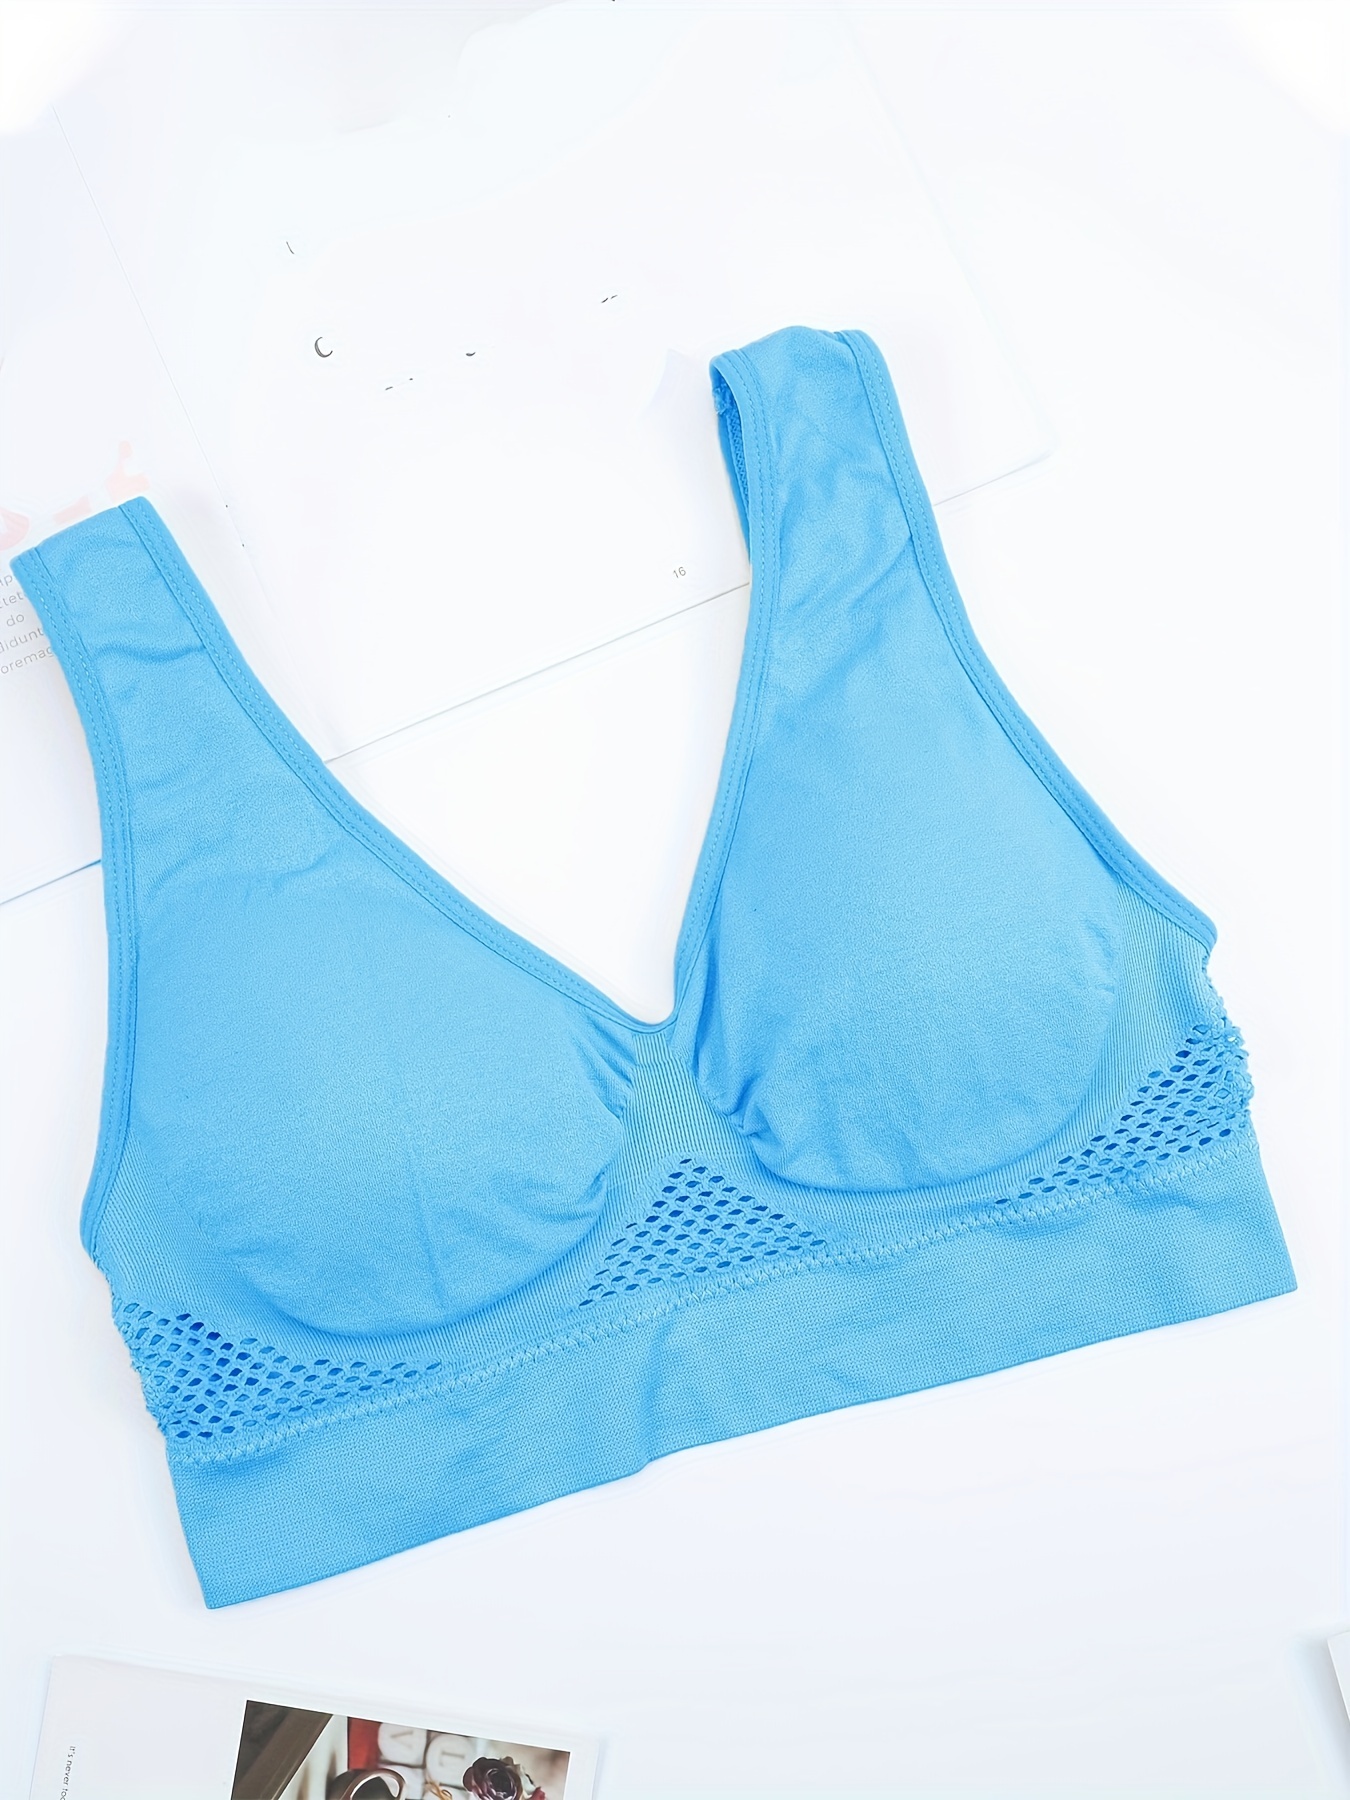 Push-up bra - beige TAW0190-10019: Buy Tamaris Underwear online!